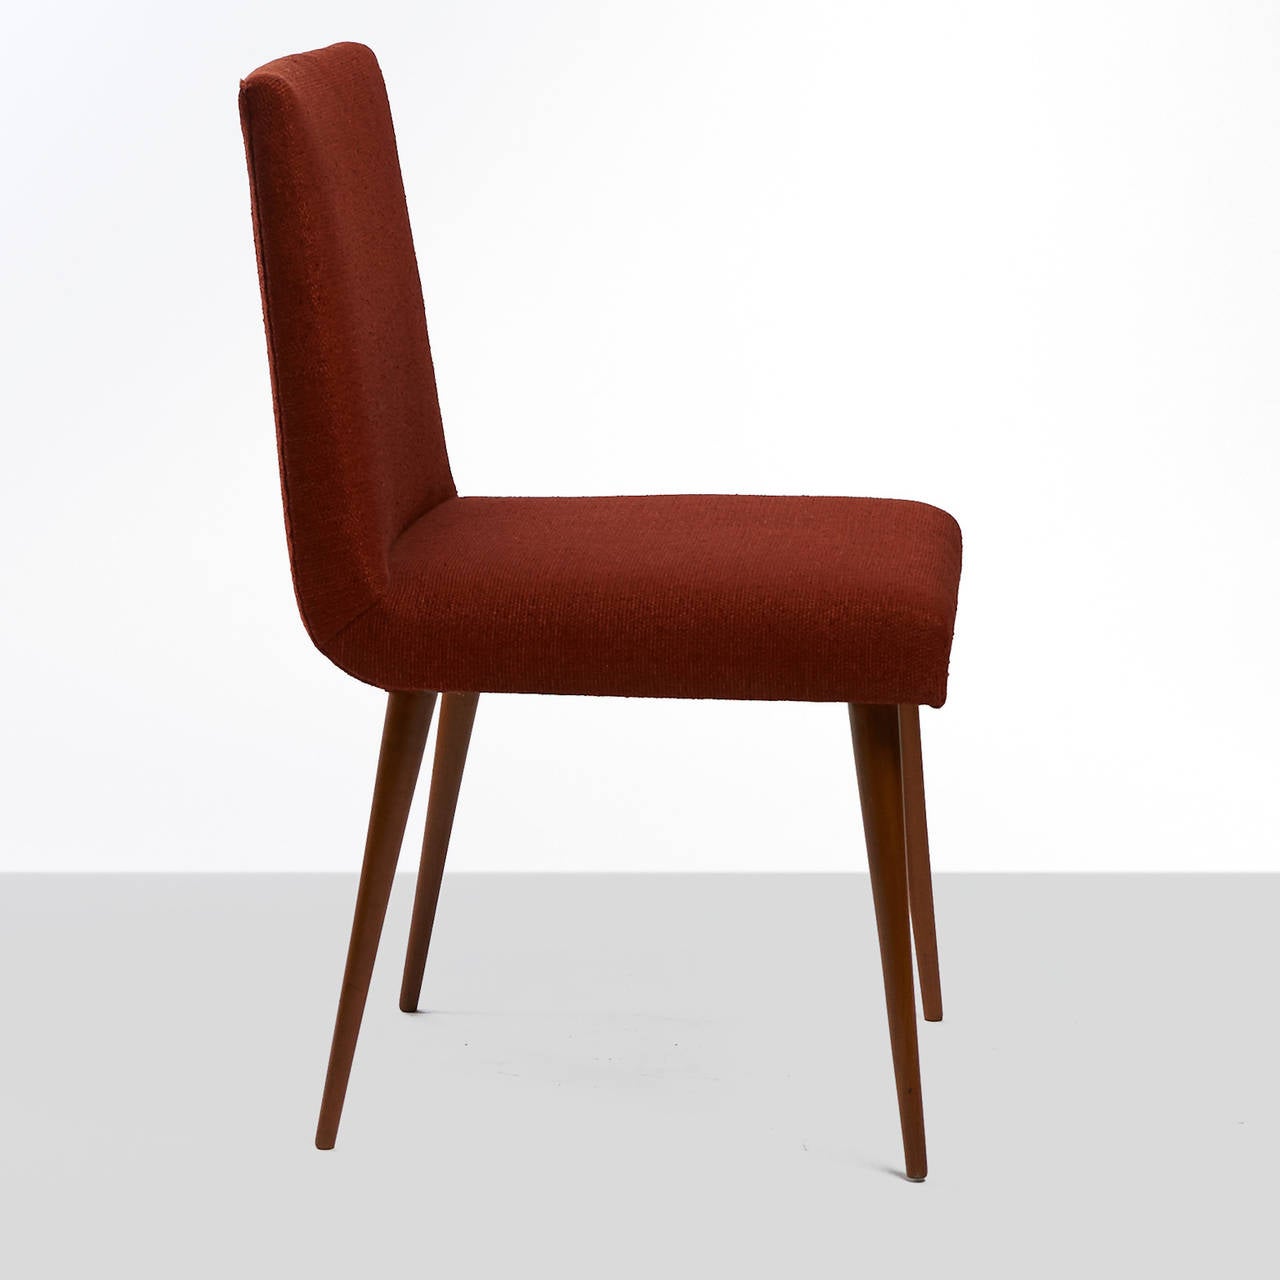 A side chair by Joaquim Tenreiro. Original upholstery and stiletto legs of
Brazilian mahogany.